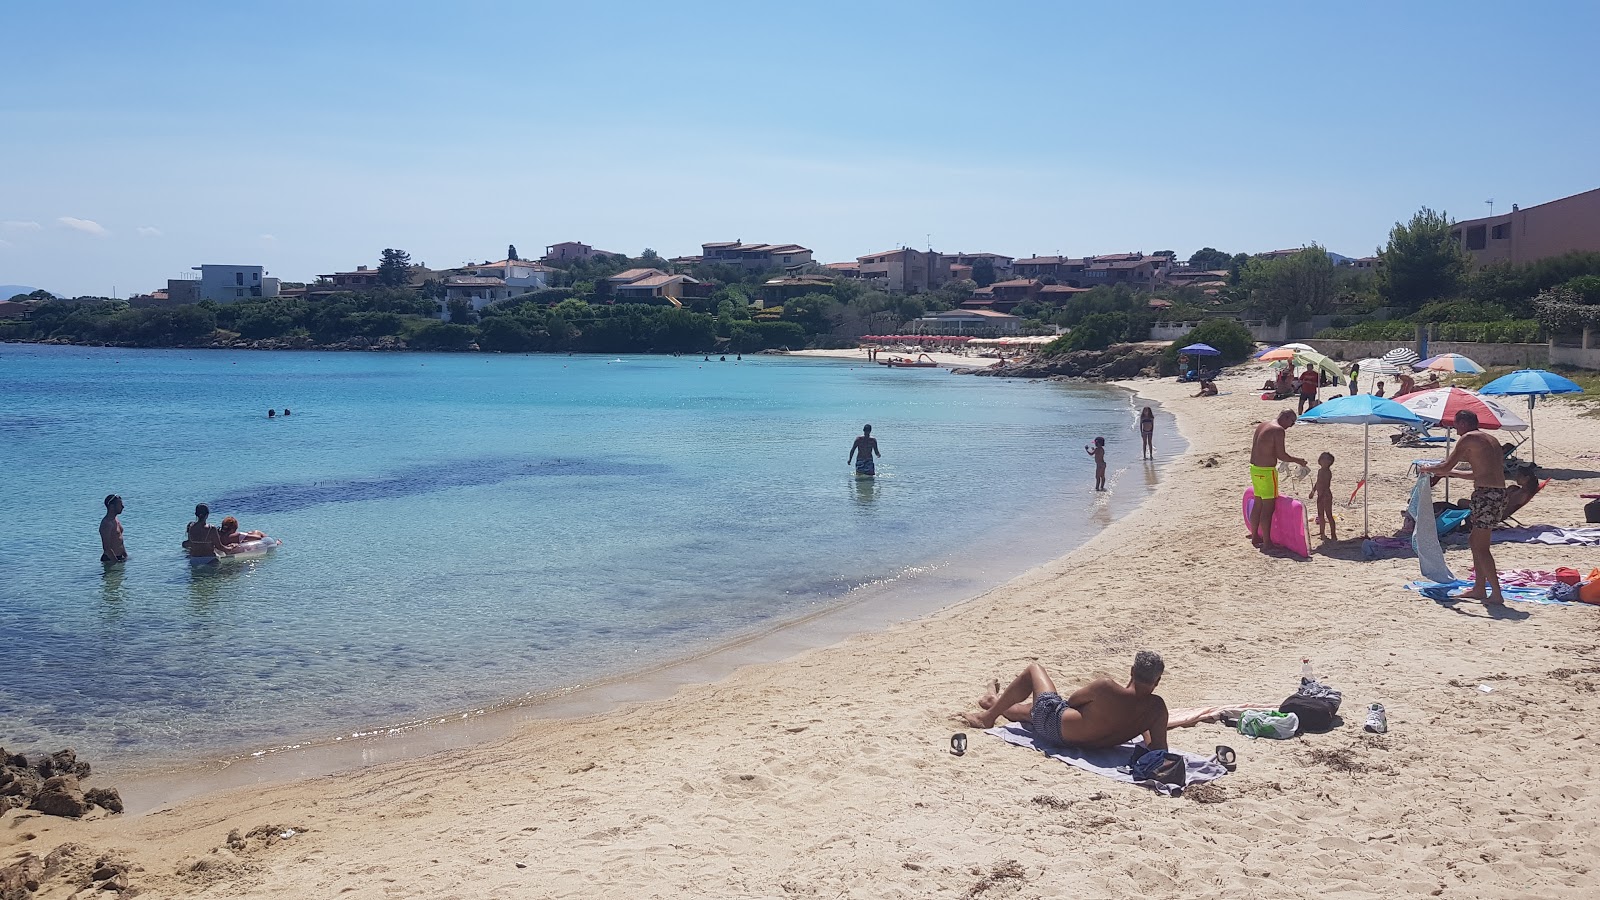 Photo of Spiaggia Punta Pedrosa with small multi bays